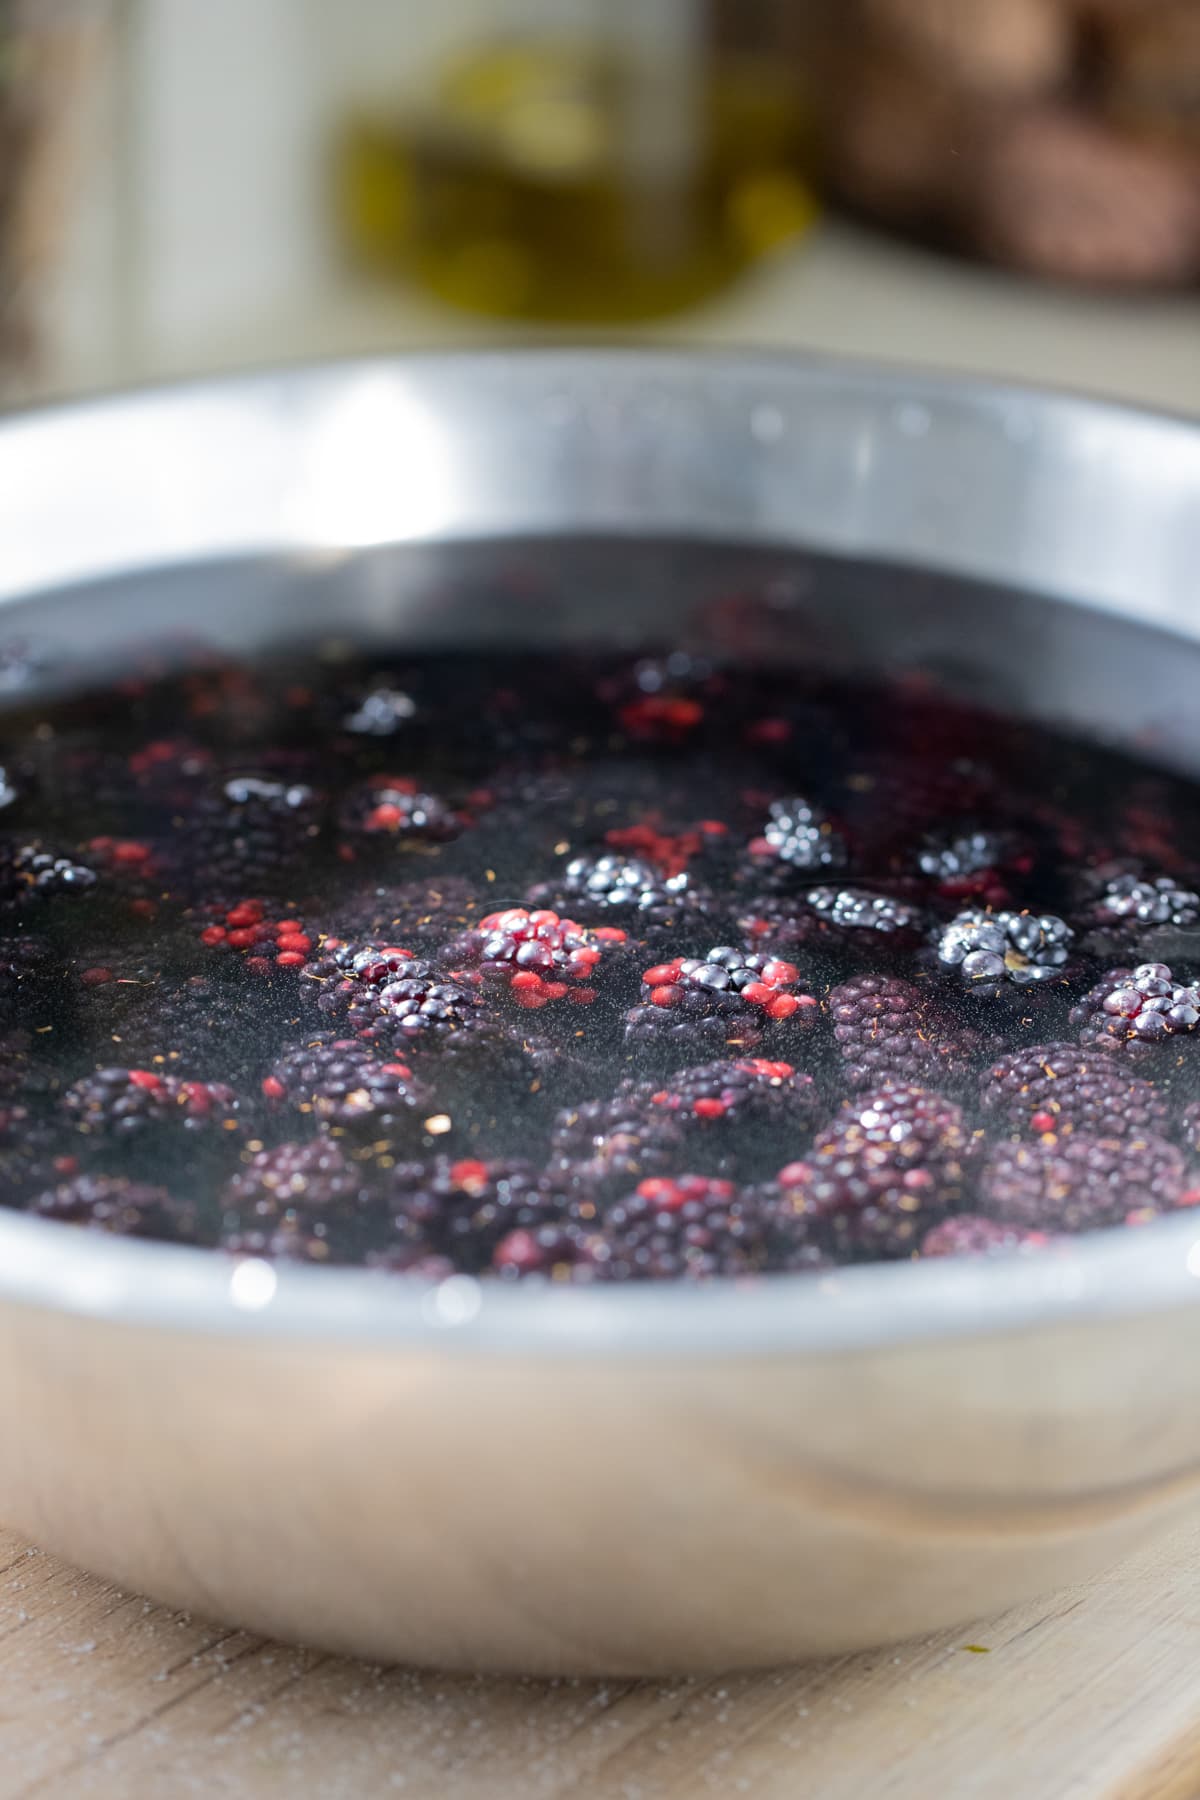 washing the blackberries